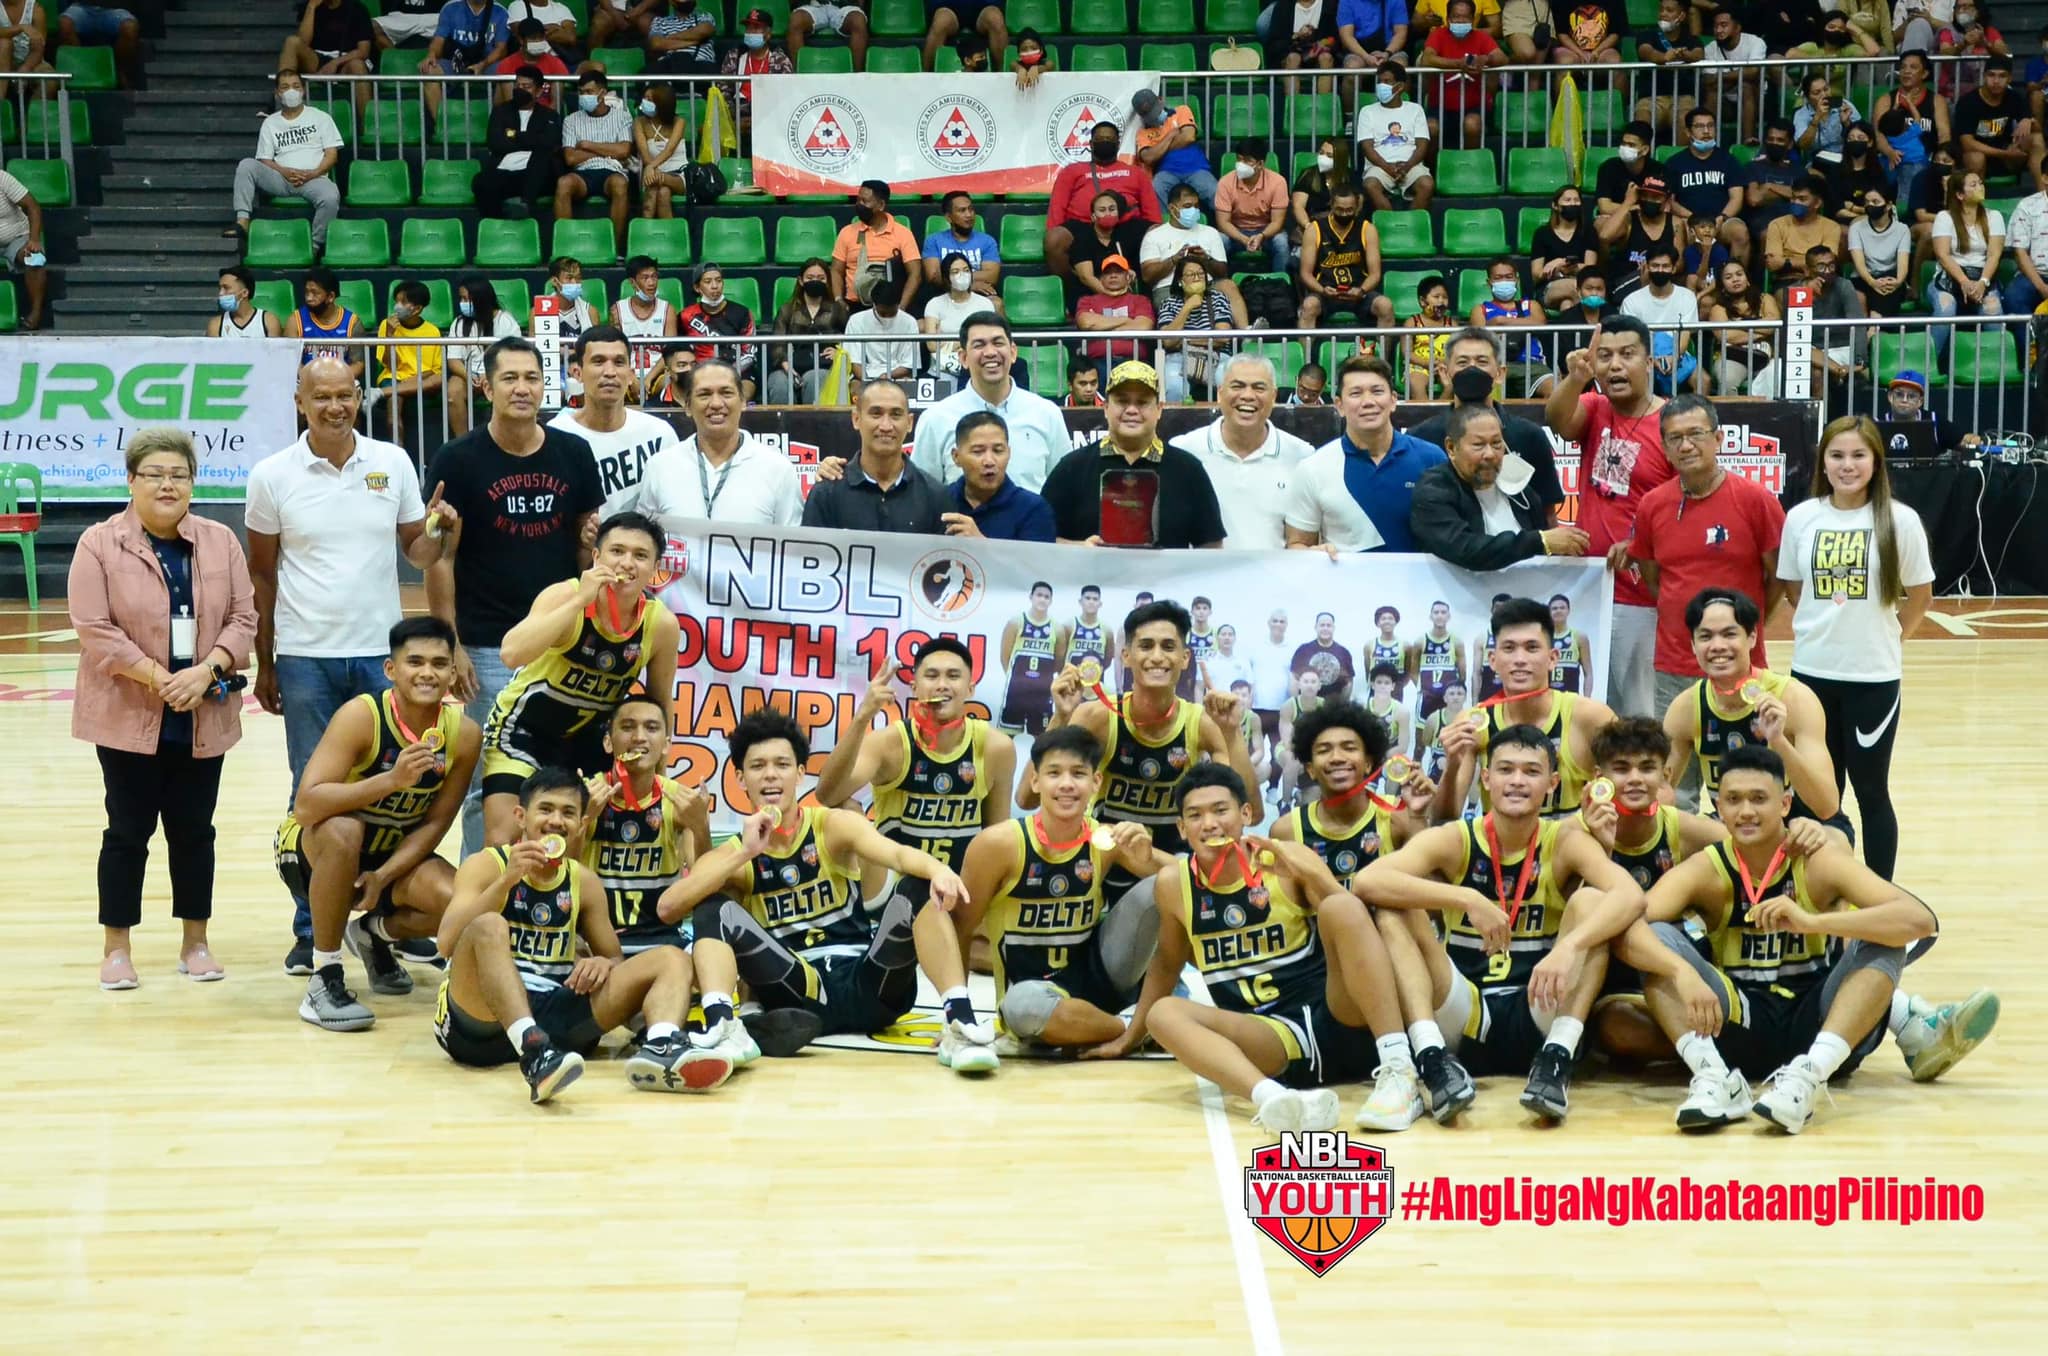 2022-NBL-Youth-Pampanga-Delta-U19 Sacred Heart-Cebu, Pampanga Delta lead SMART NBTC cast Basketball NBTC News  - philippine sports news